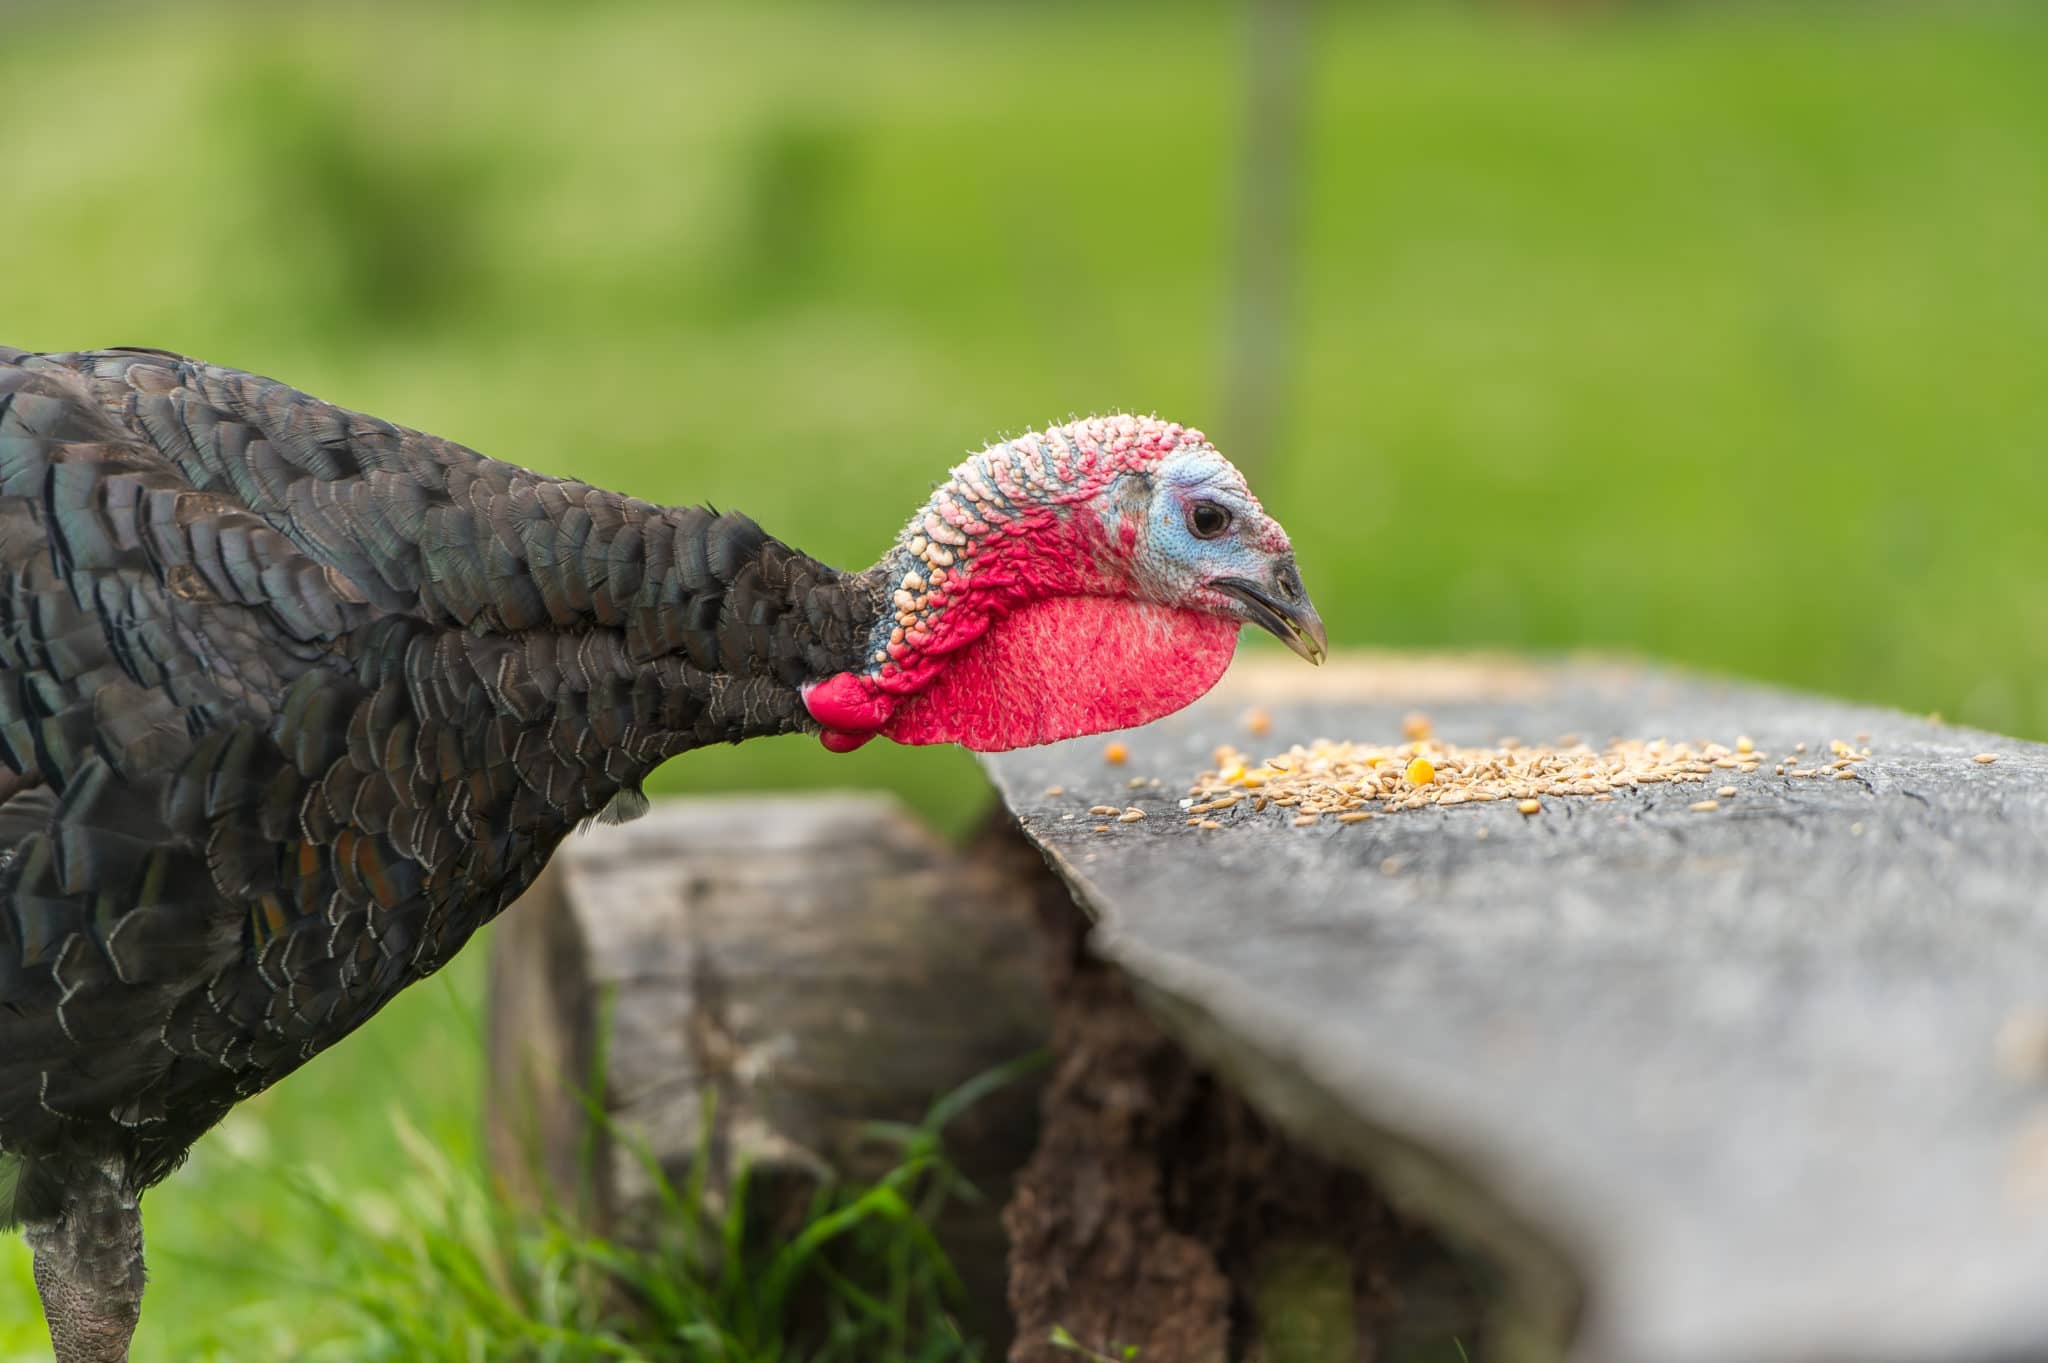 Turkey Eating Grains